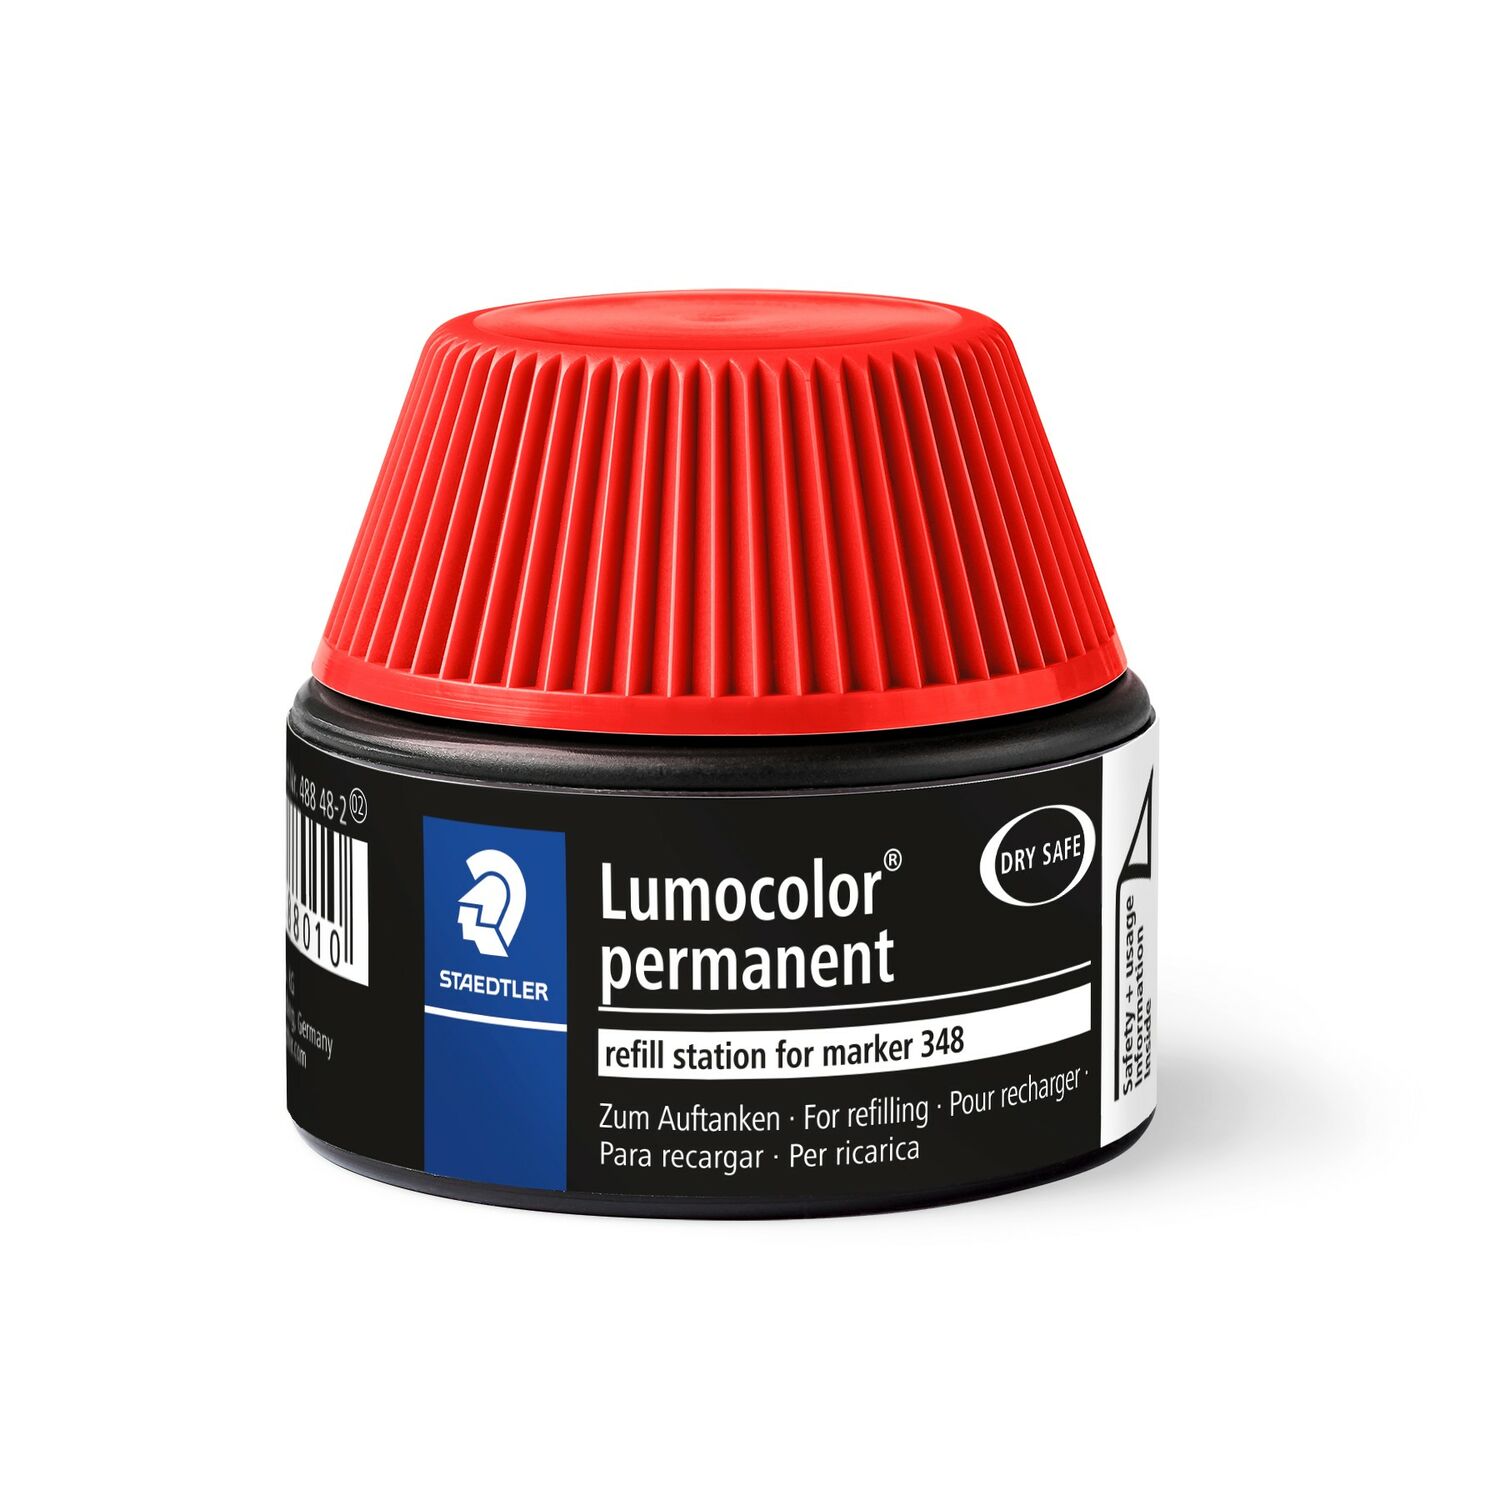 Lumocolor® permanent marker refill station 488 48 - Refill station for Lumocolor permanent duo marker 348